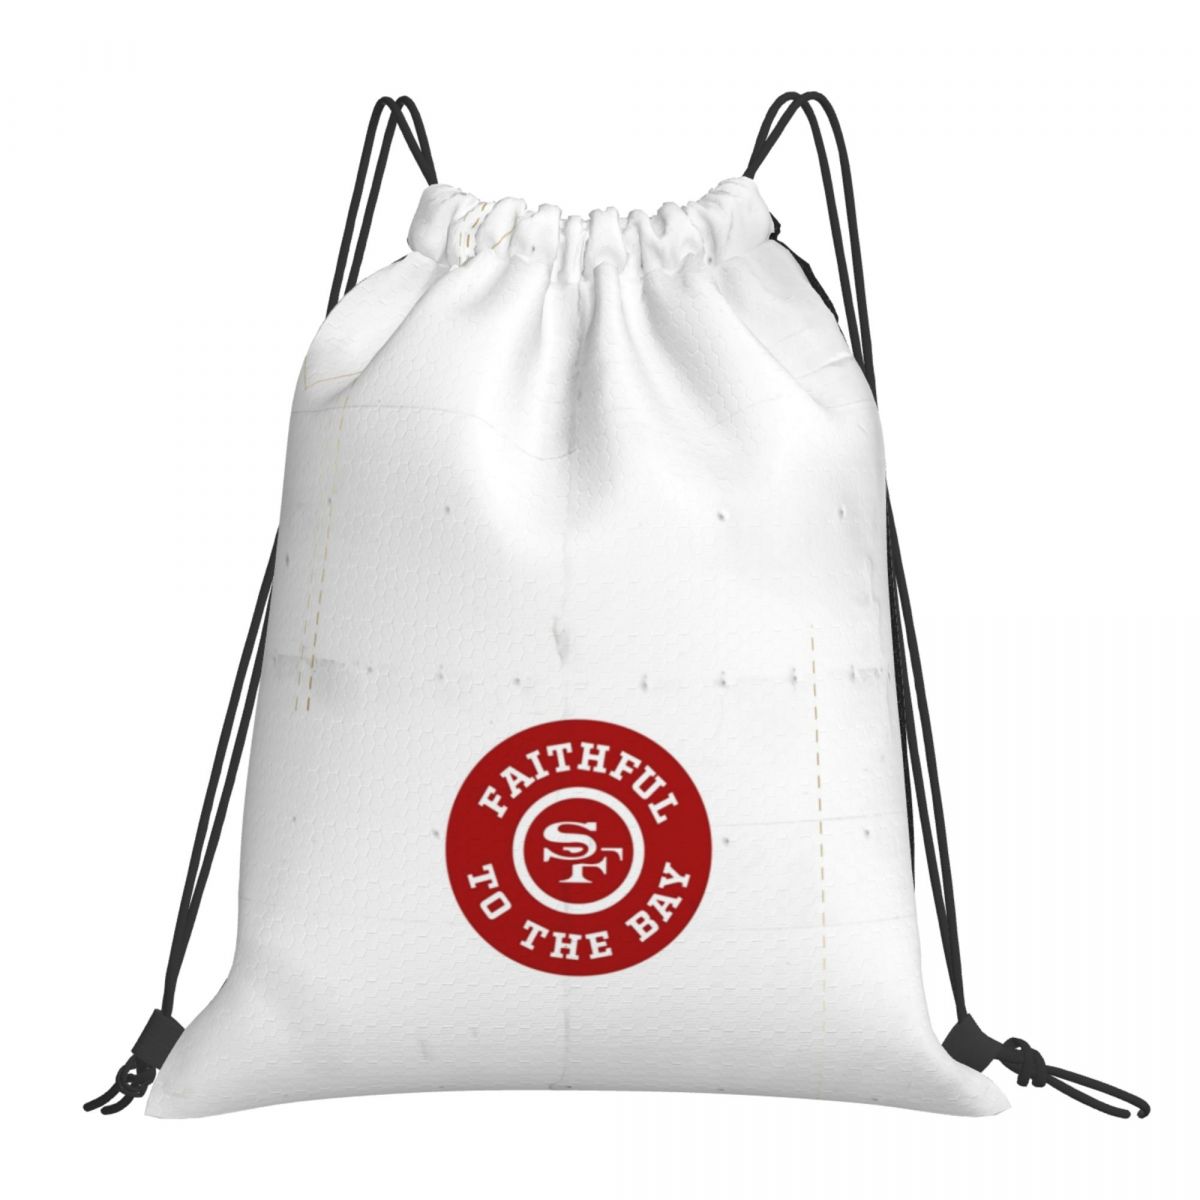 San Francisco 49ers Faithful to The Bay Drawstring Backpack Sports Gym Bag